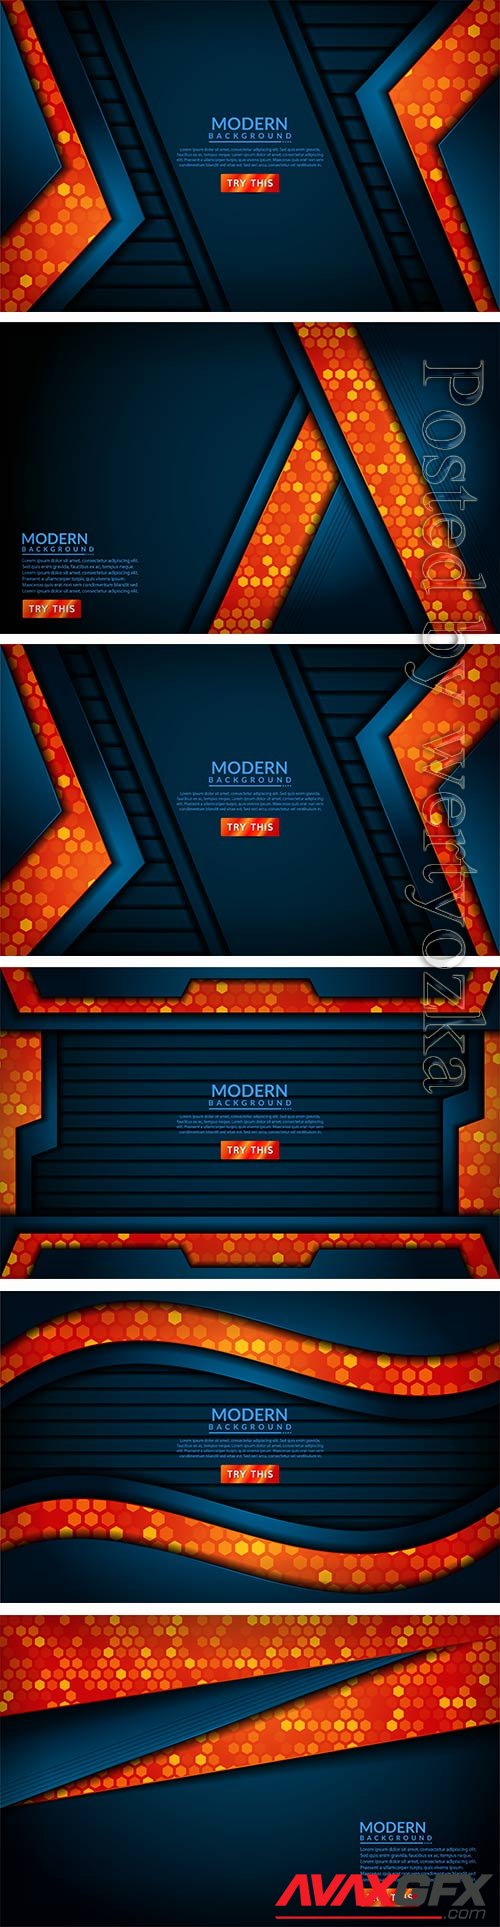 Modern tech blue combine with orange vector background